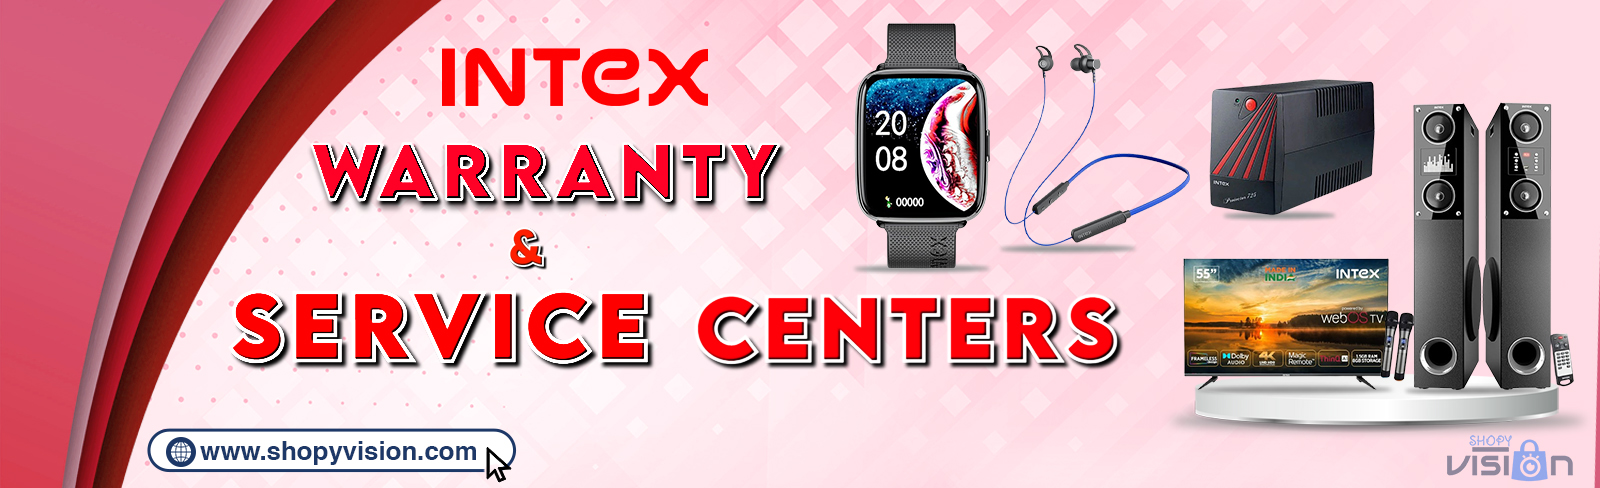 Intex Warranty & Service Center In India Desktop Banner